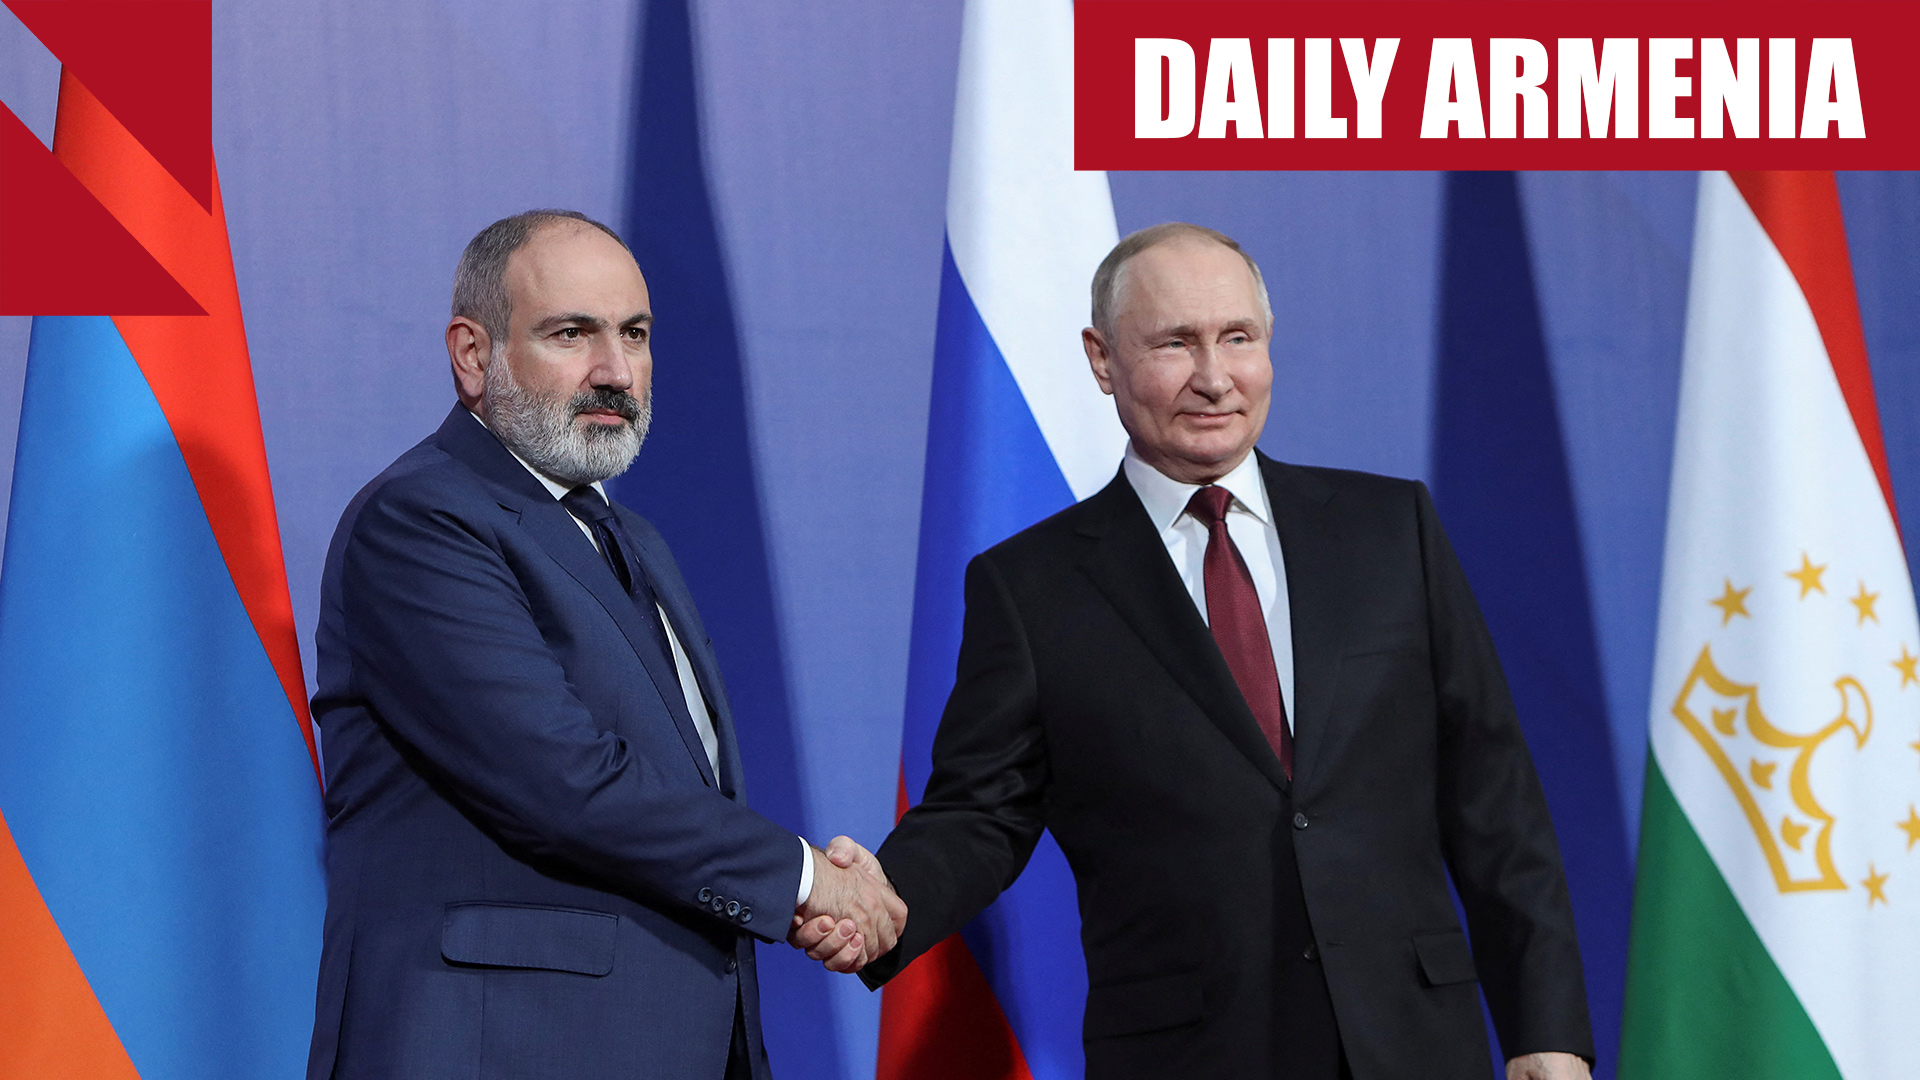 Nikol Pashinyan ends boycott by attending key Russian summit